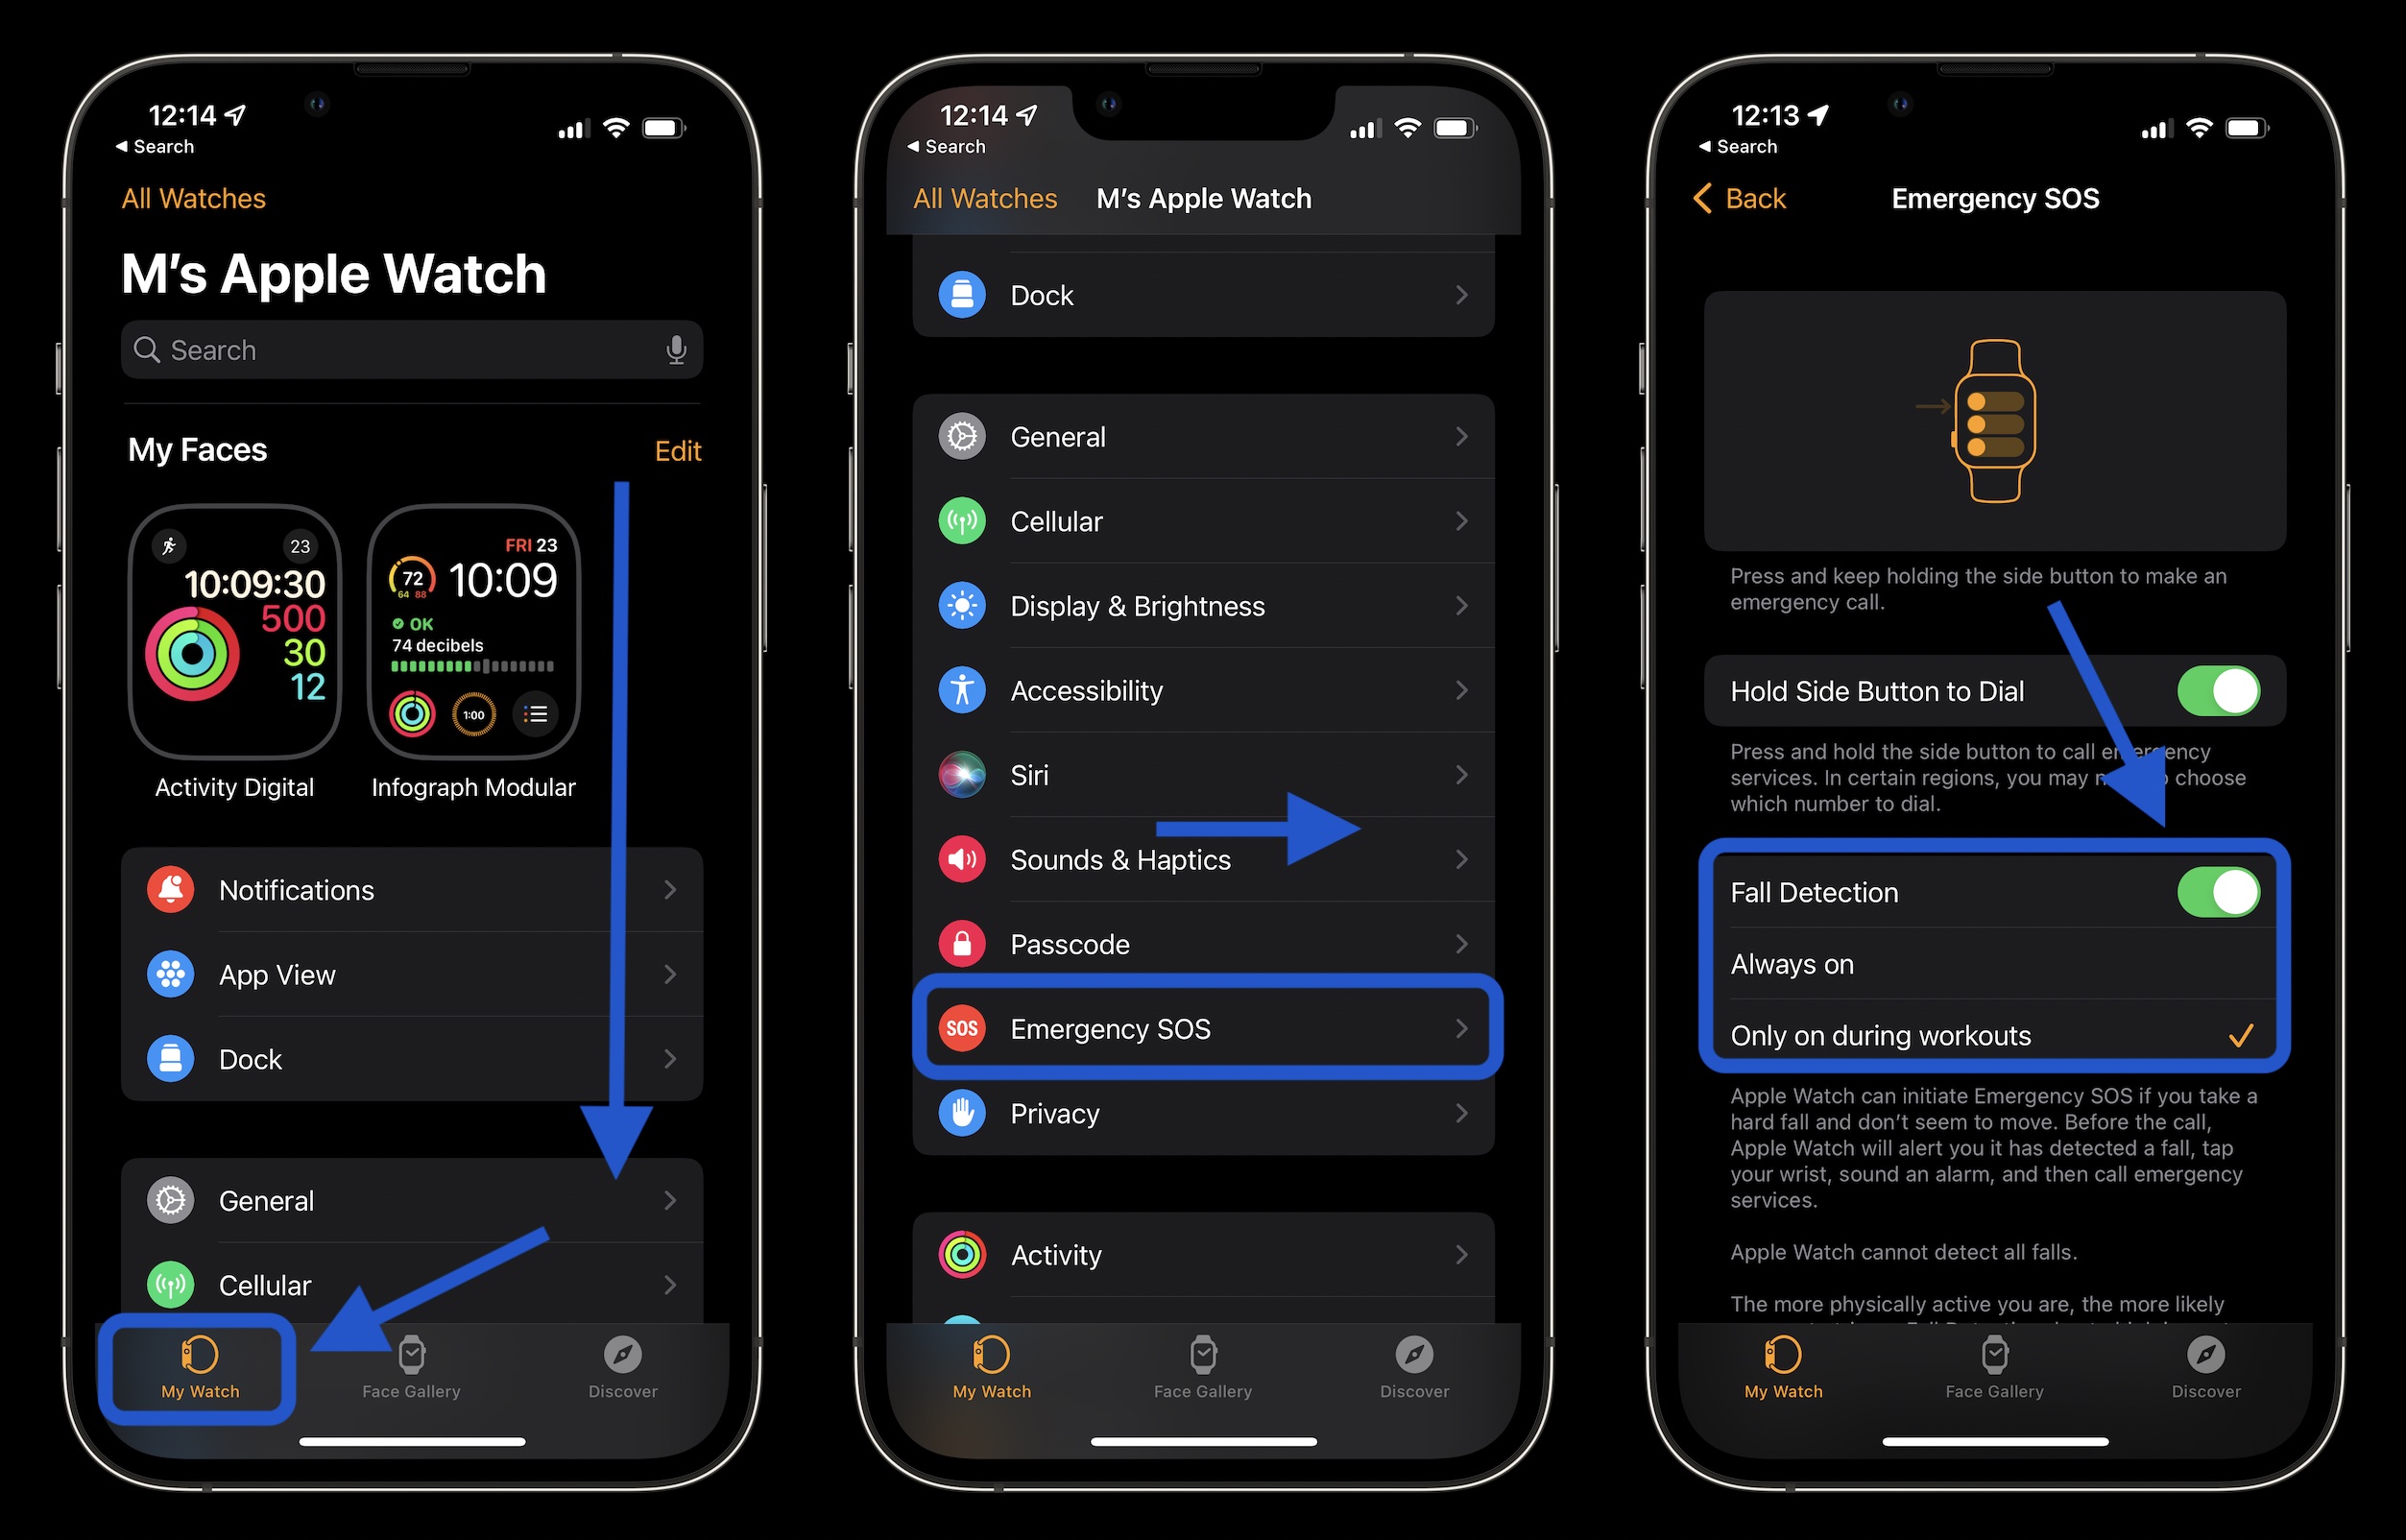 How to turn on Apple Watch fall detection walkthrough 1 - Apple Watch app > My Watch tab > Emergency SOS